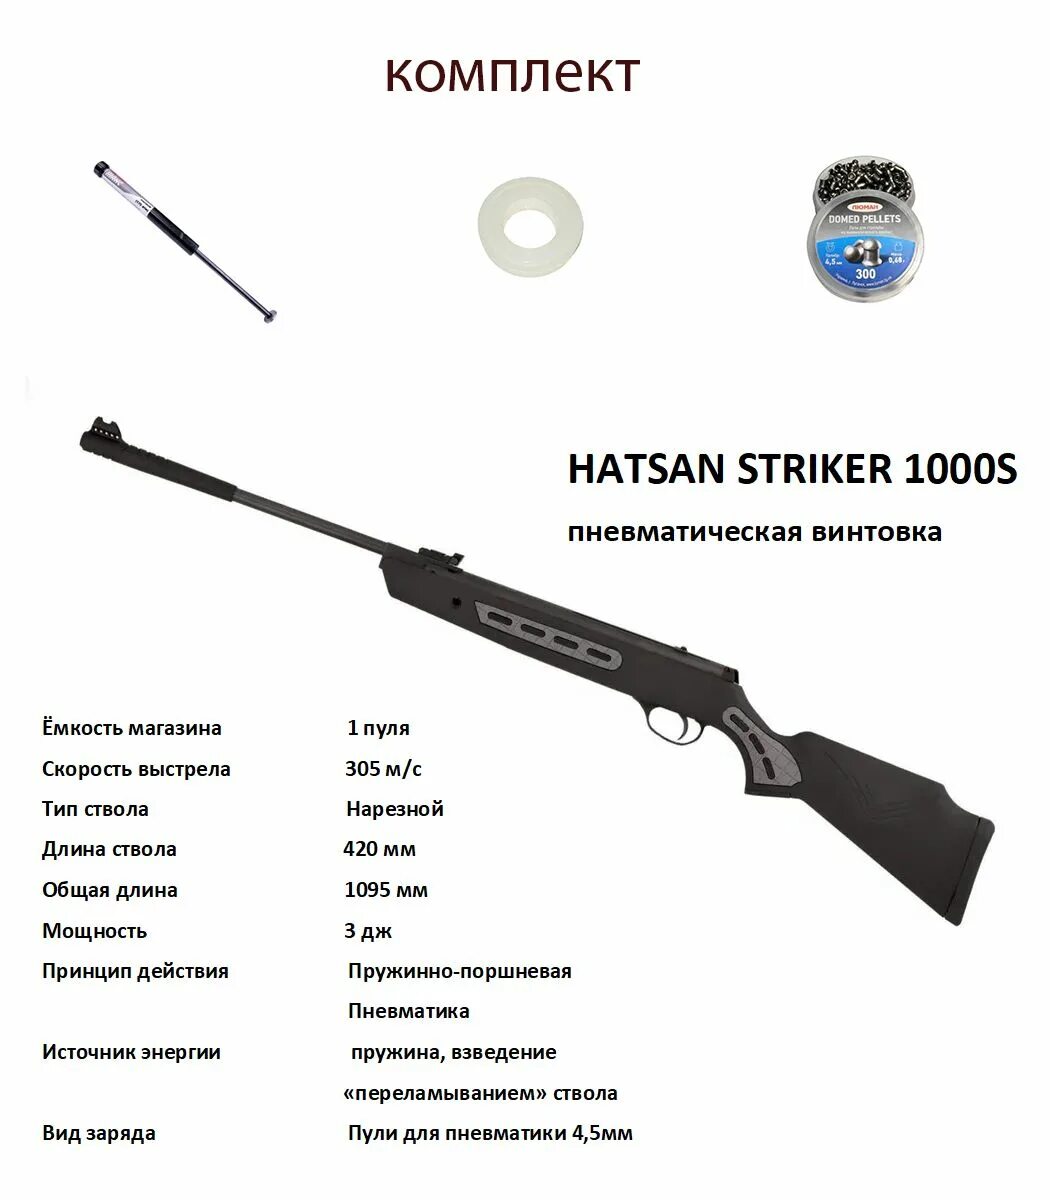 Пневматическая винтовка Hatsan Striker 1000s. Пневматическая винтовка Hatsan 1000 s характеристики. Хатсан Страйкер 1000. Пневматическая винтовка Хатсан Страйкер характеристики. Хатсан страйкер характеристики